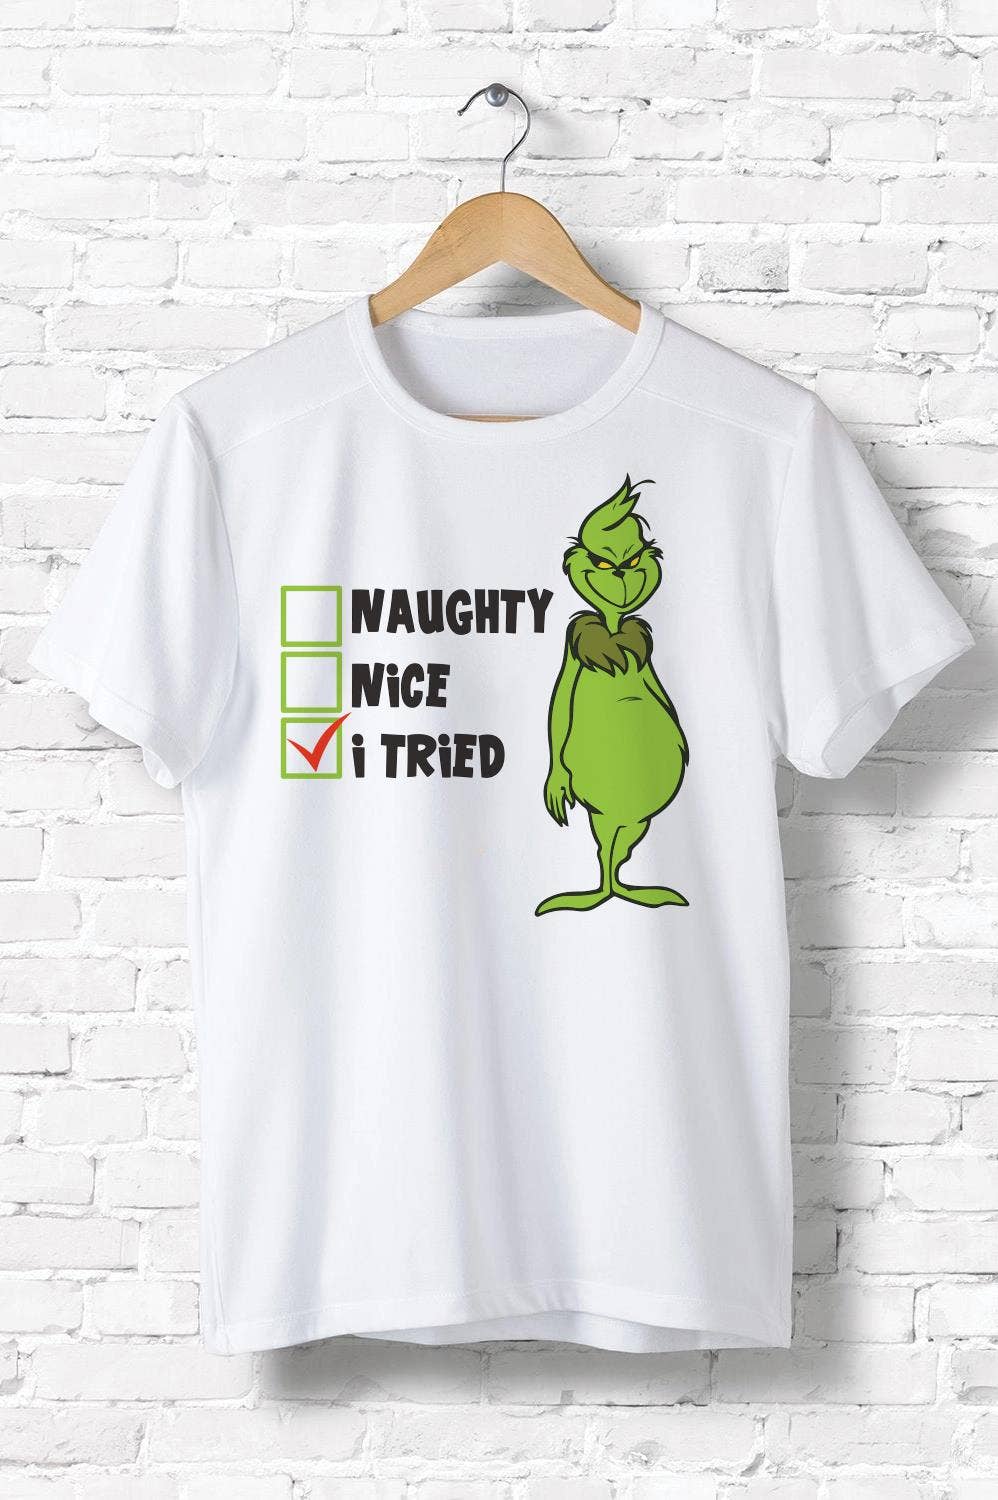 ShopLukeGifts - Naughty Nice I Tired Shirt, Grinch Shirt, Funny Christmas